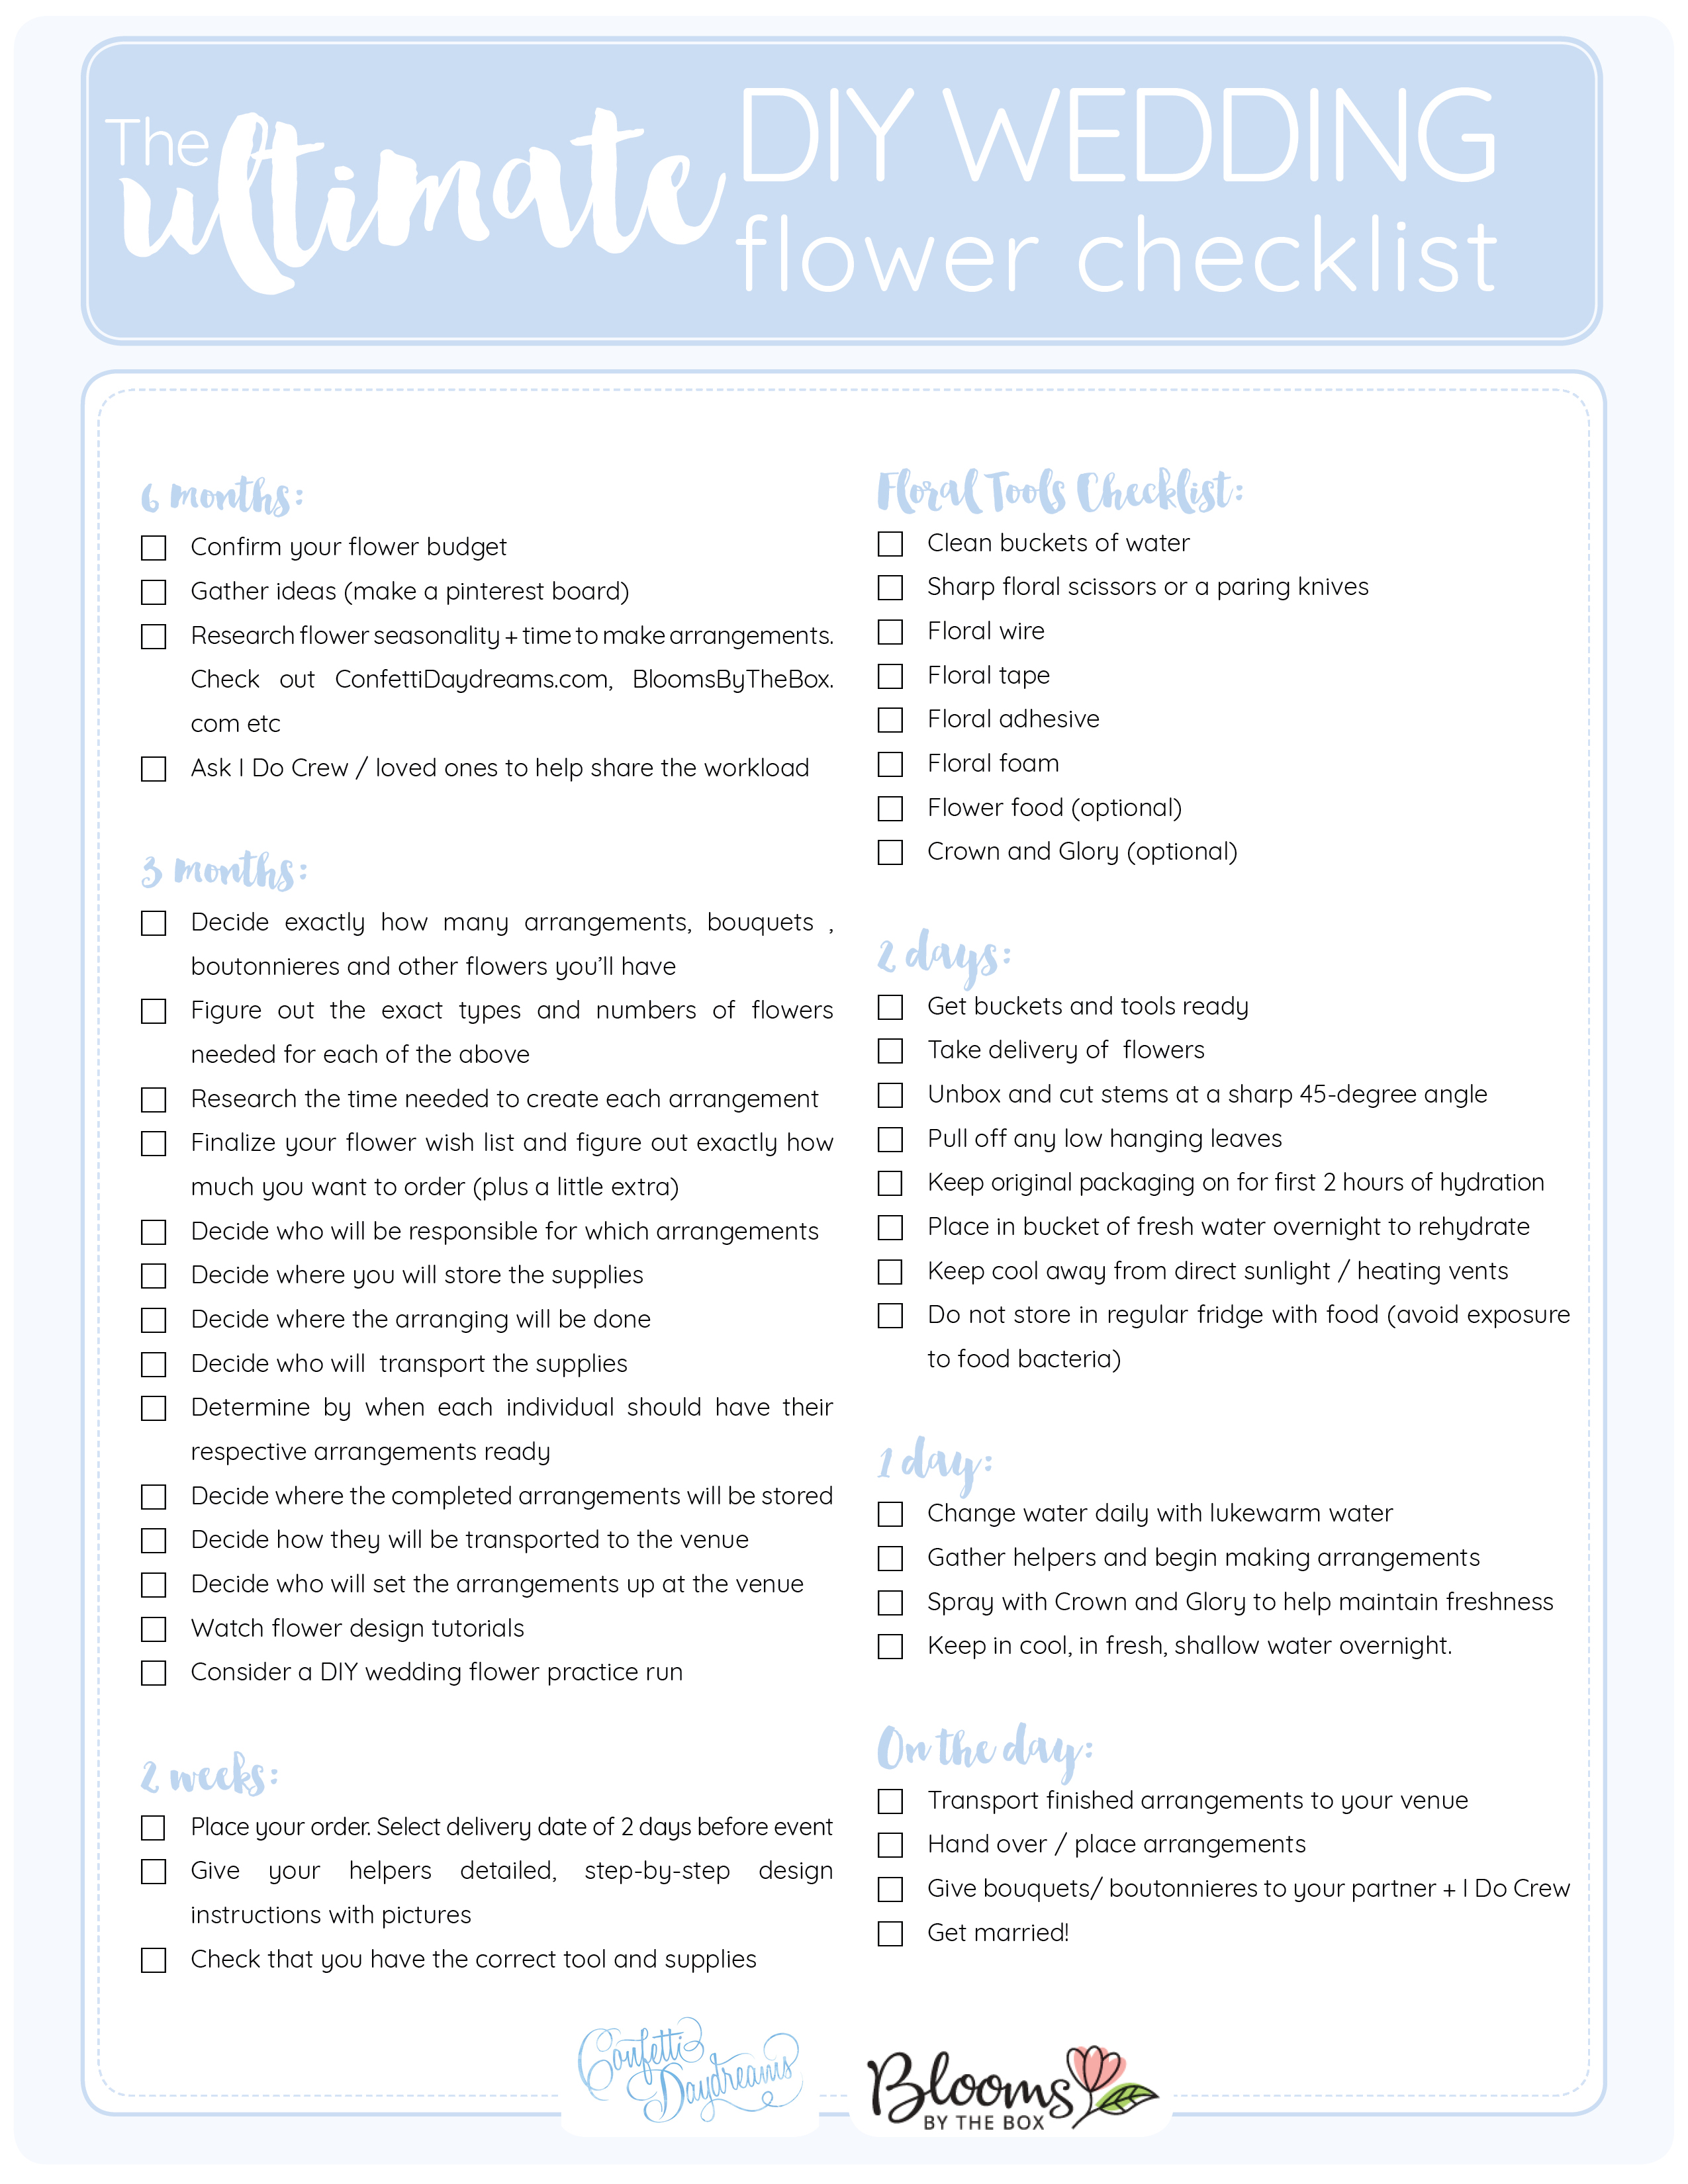 The Ultimate Printable DIY Wedding Flower Checklist My blog